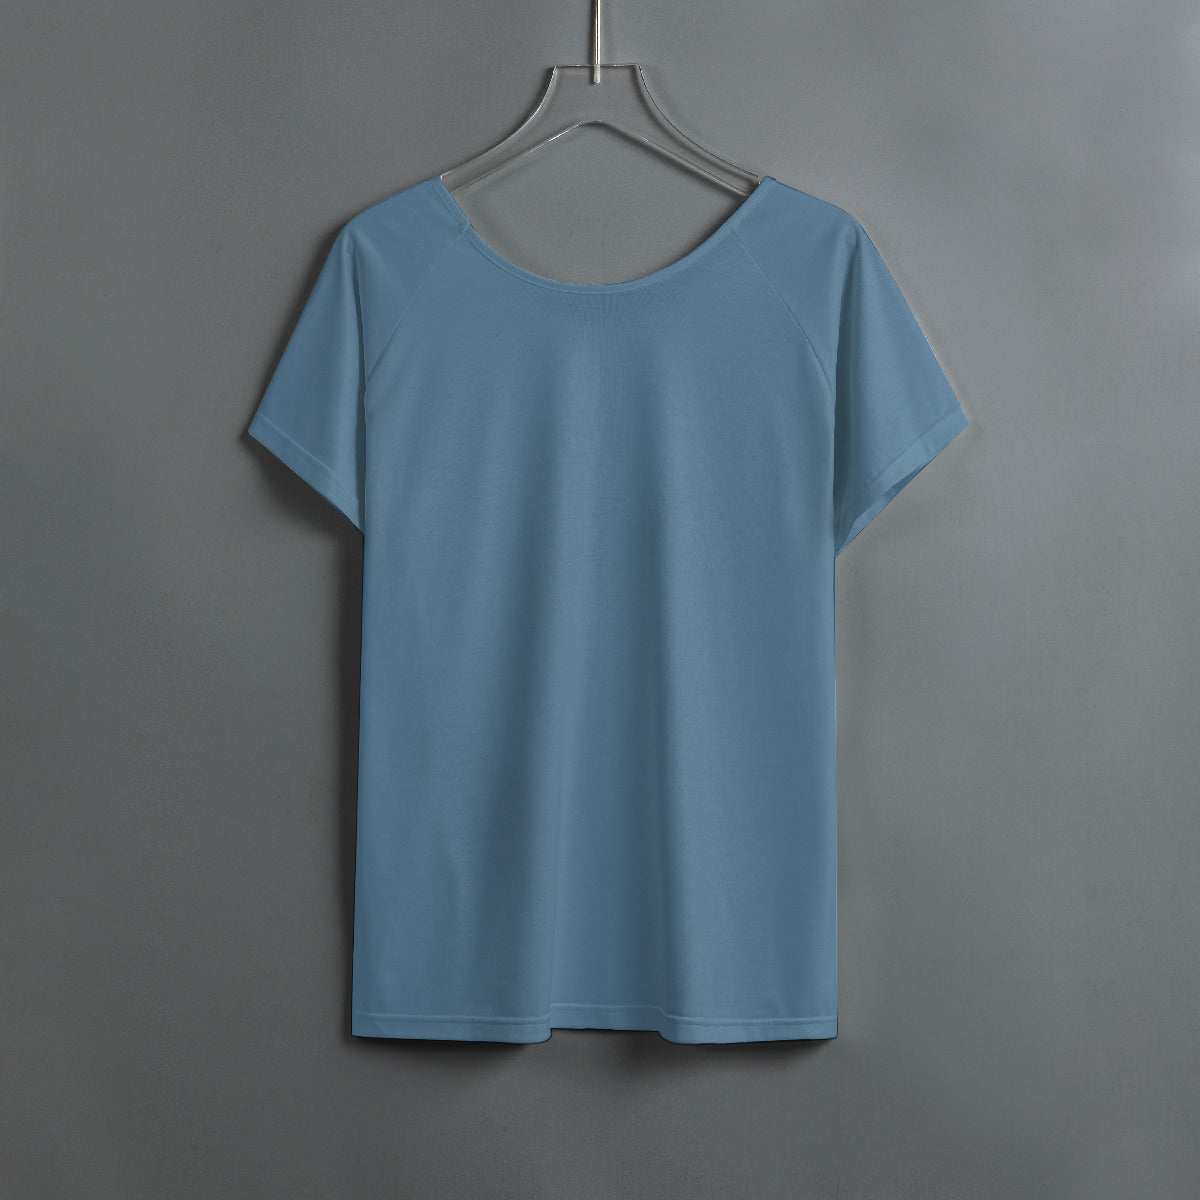 Pattern 289a -- Women's Round Neck T-shirt With Raglan Sleeve